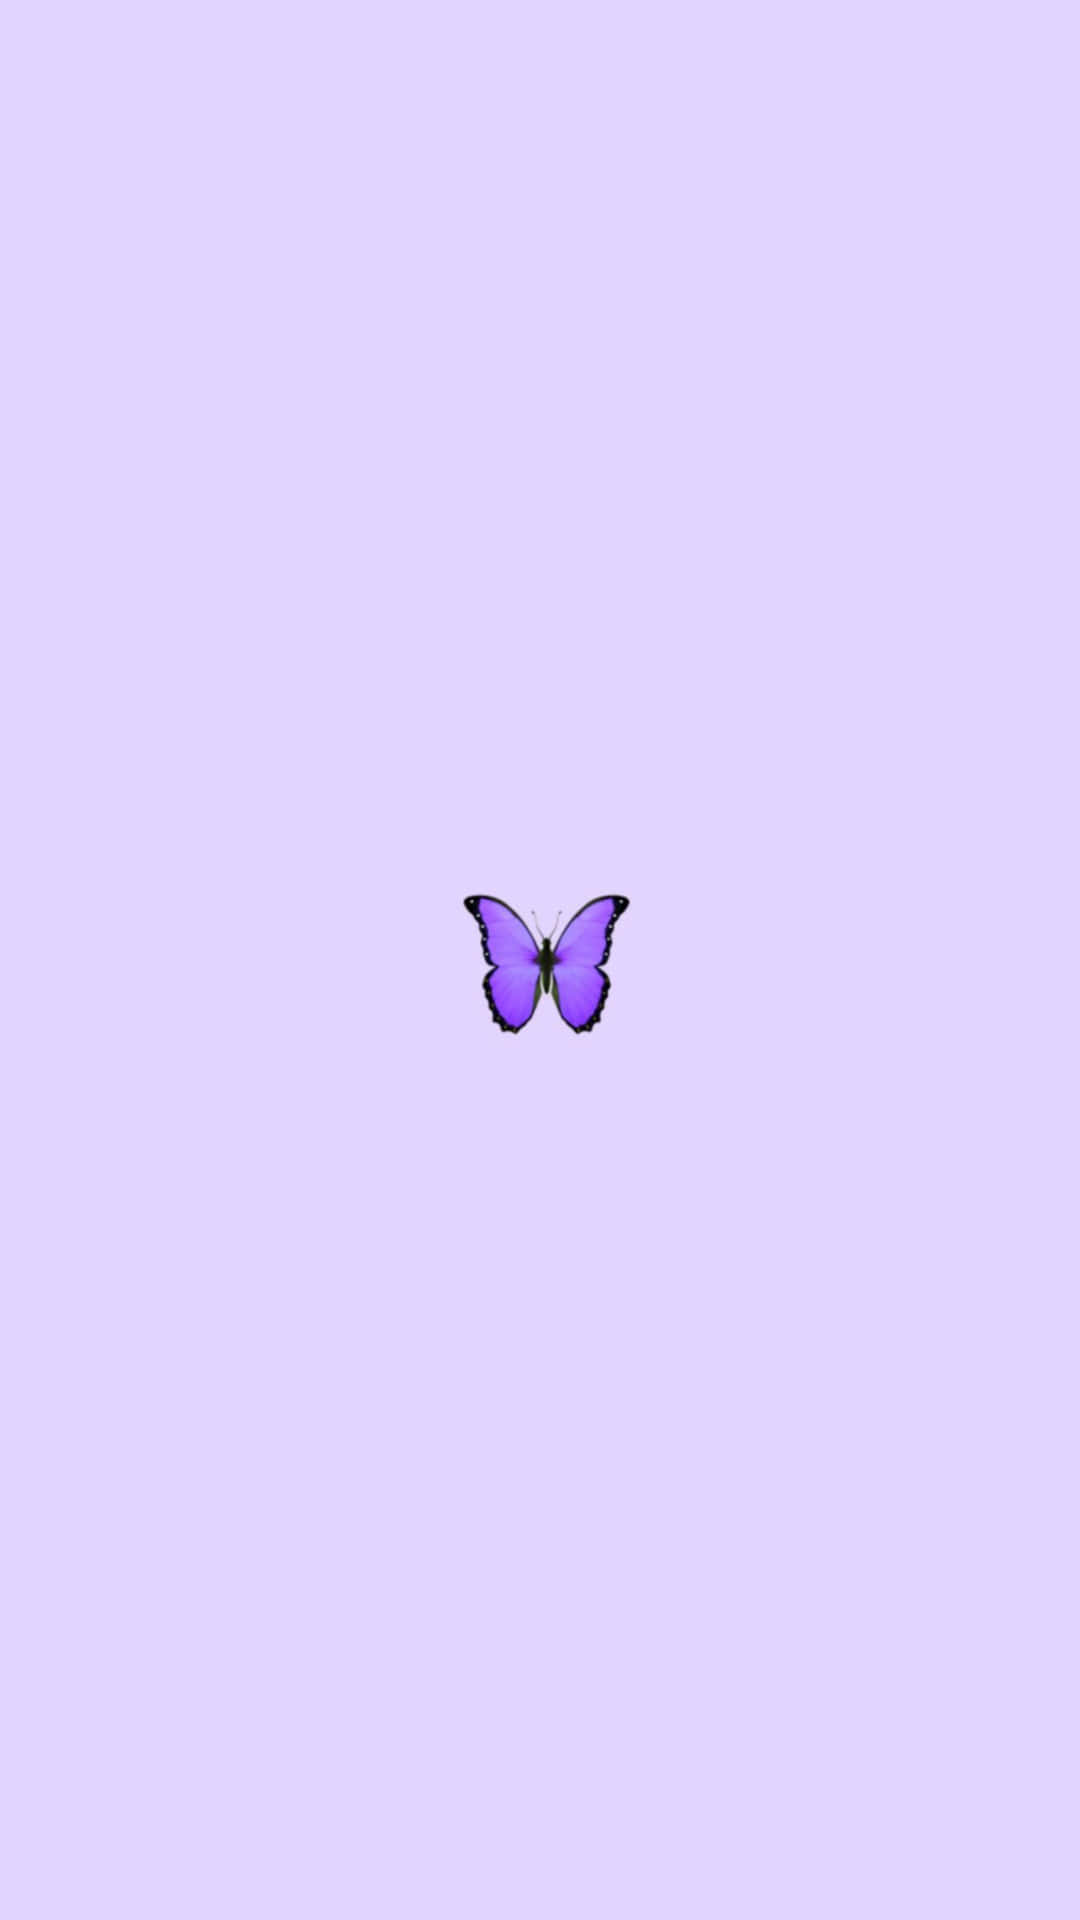 Aesthetic purple butterfly wallpaper for phone background. - Cute purple